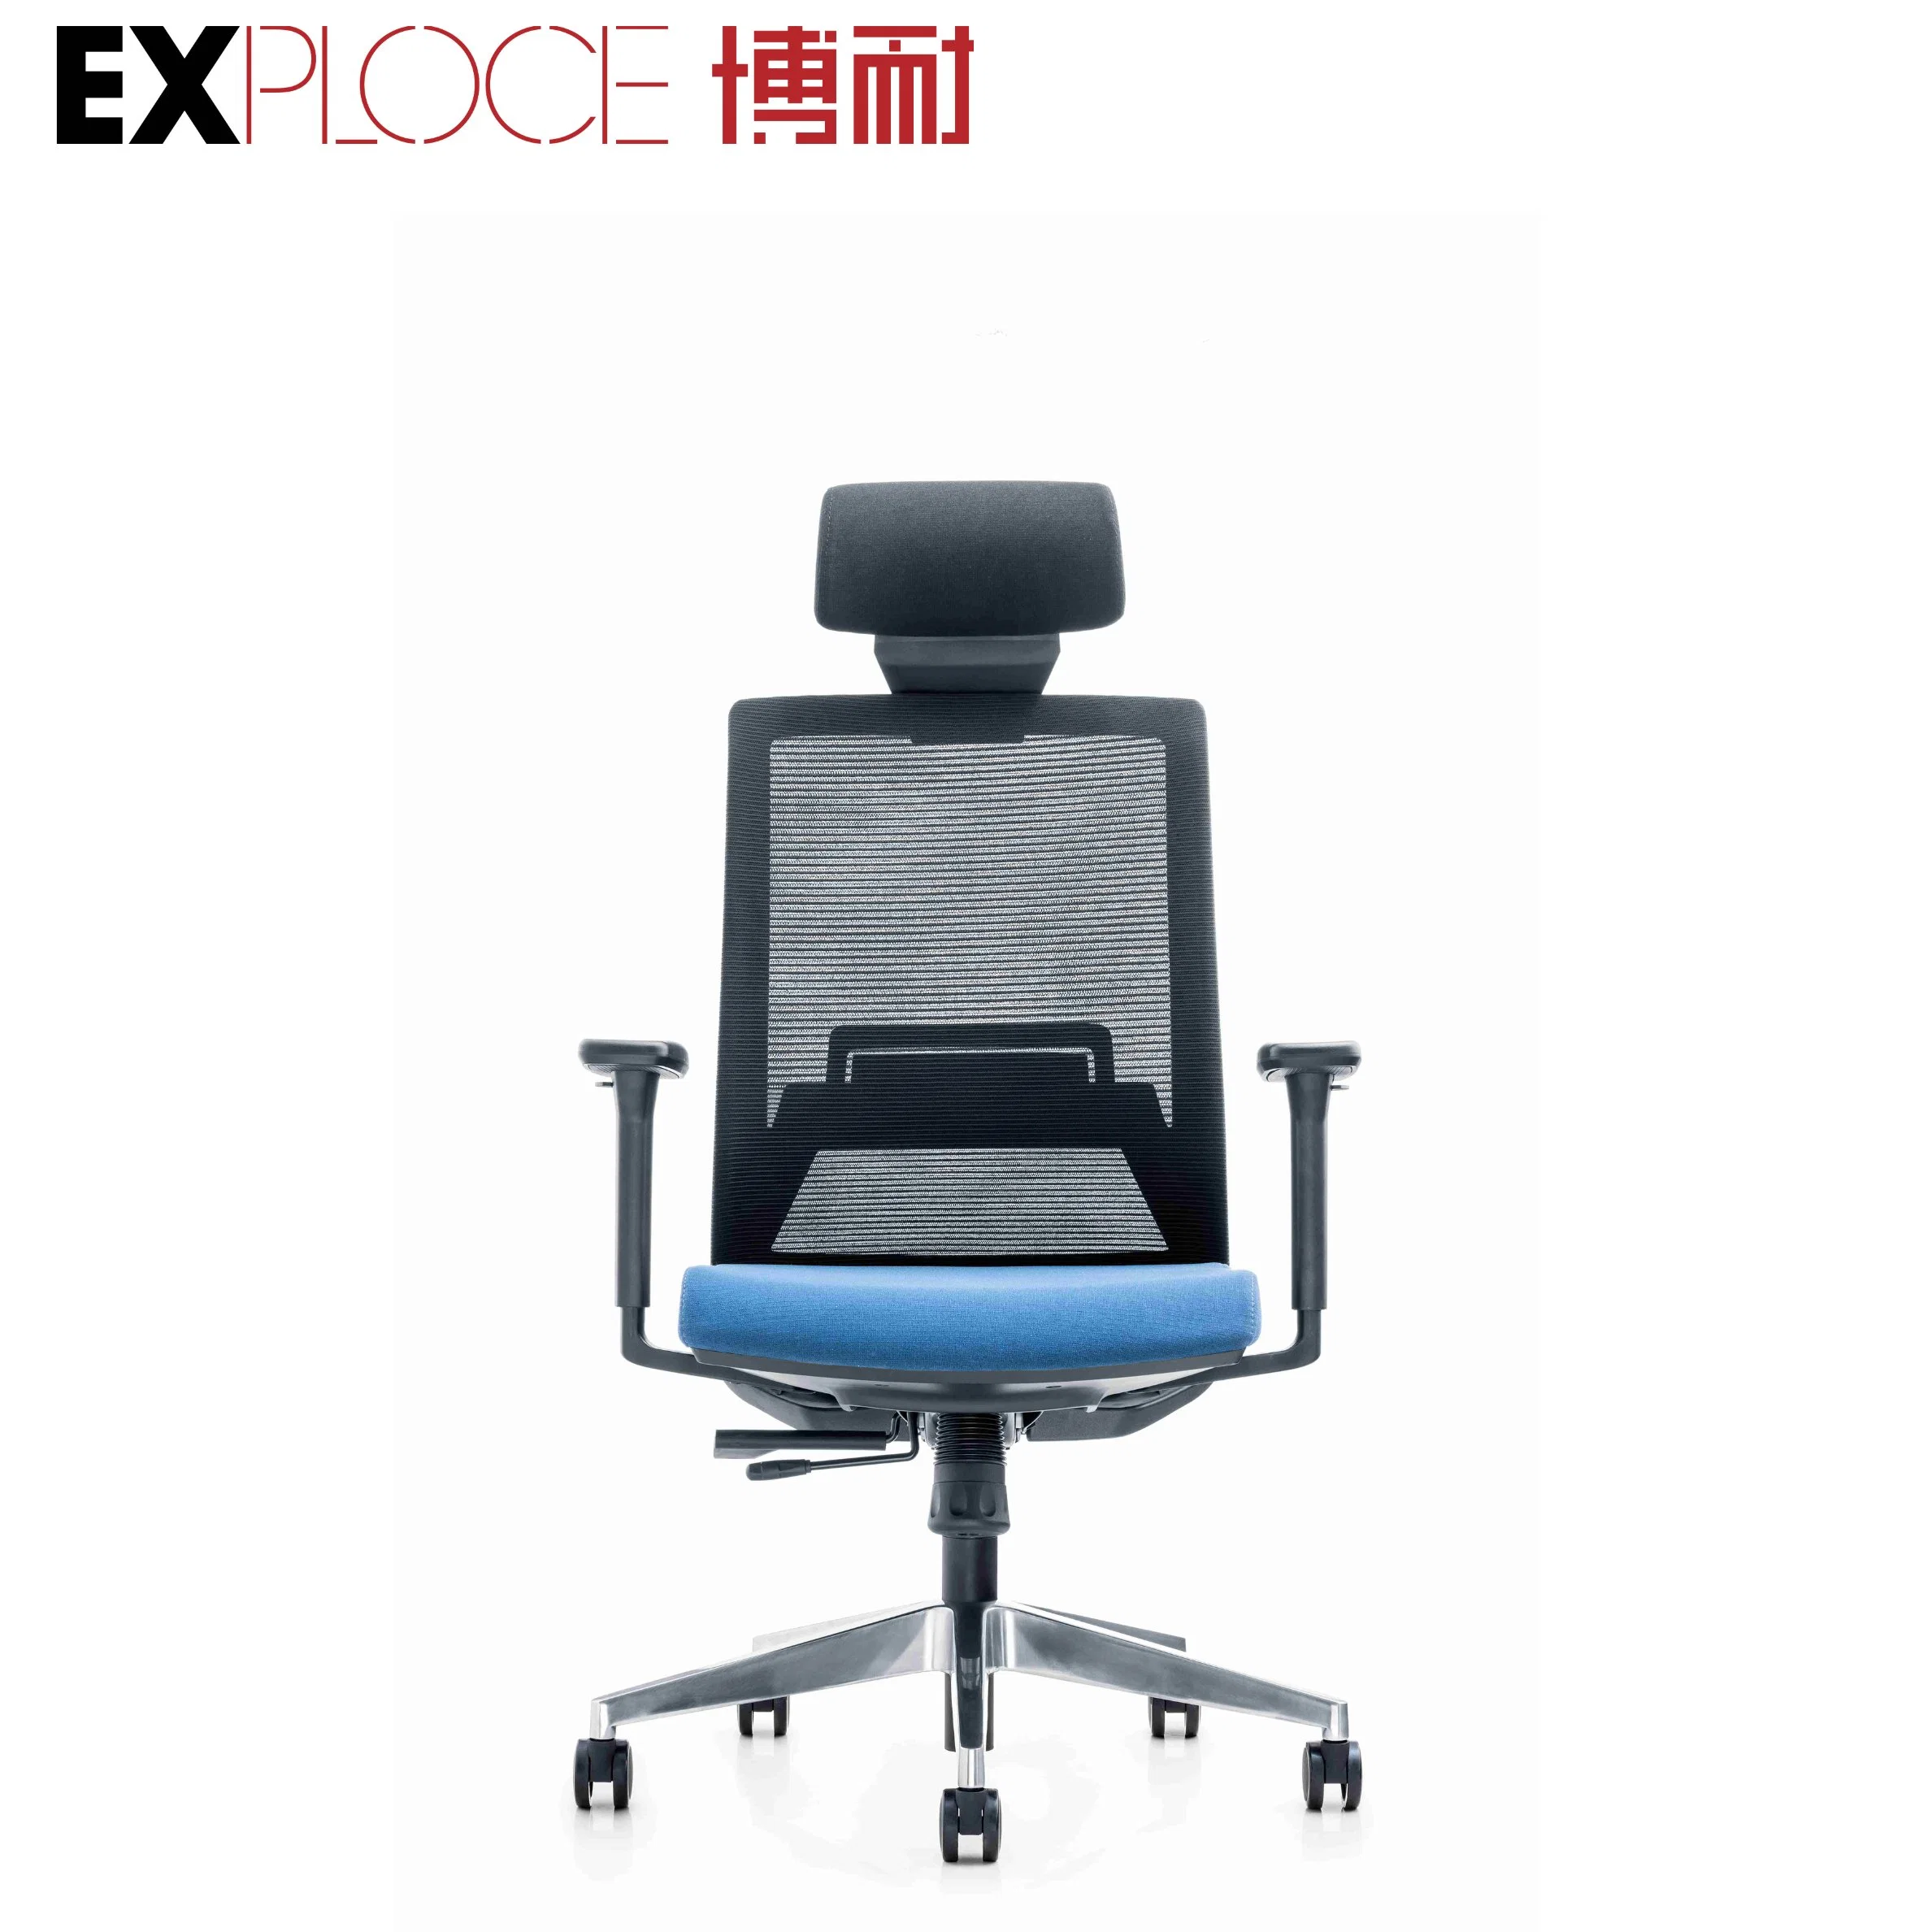 Best Price Europe Design Ergonomic Back Design Office Chair Executive Computer Swivel High Back Mesh